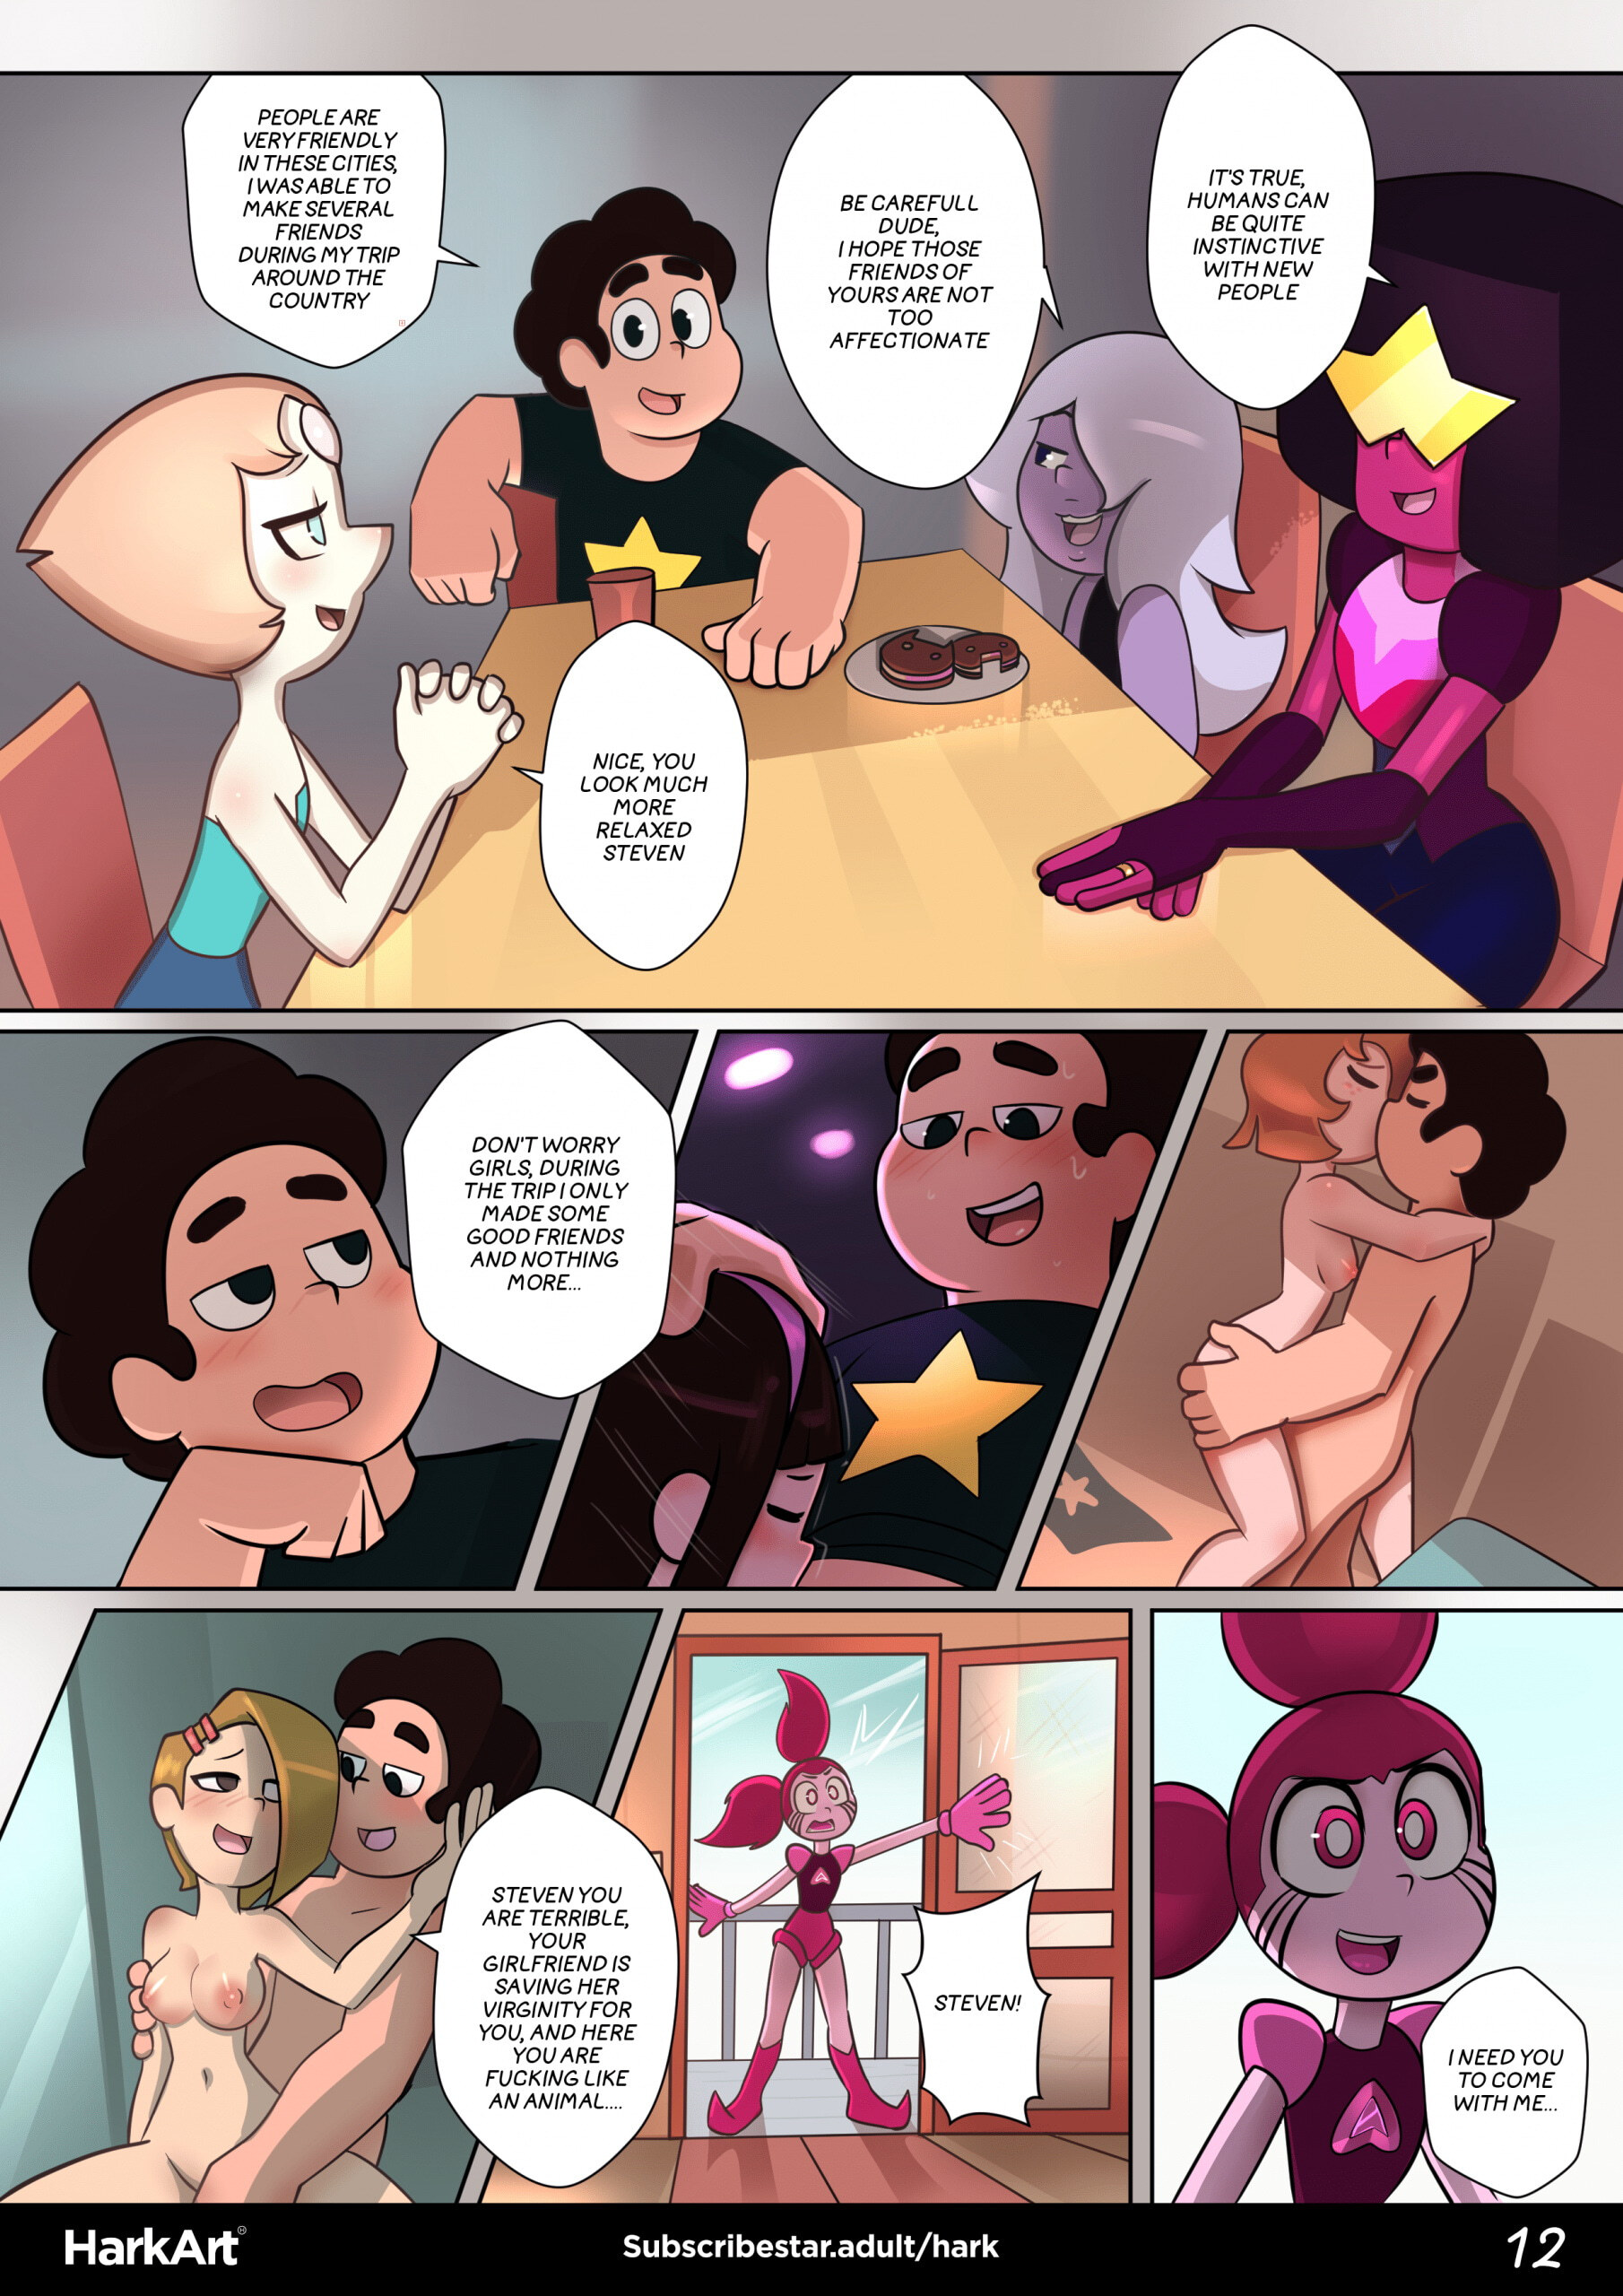 Steven's Desire - Page 13